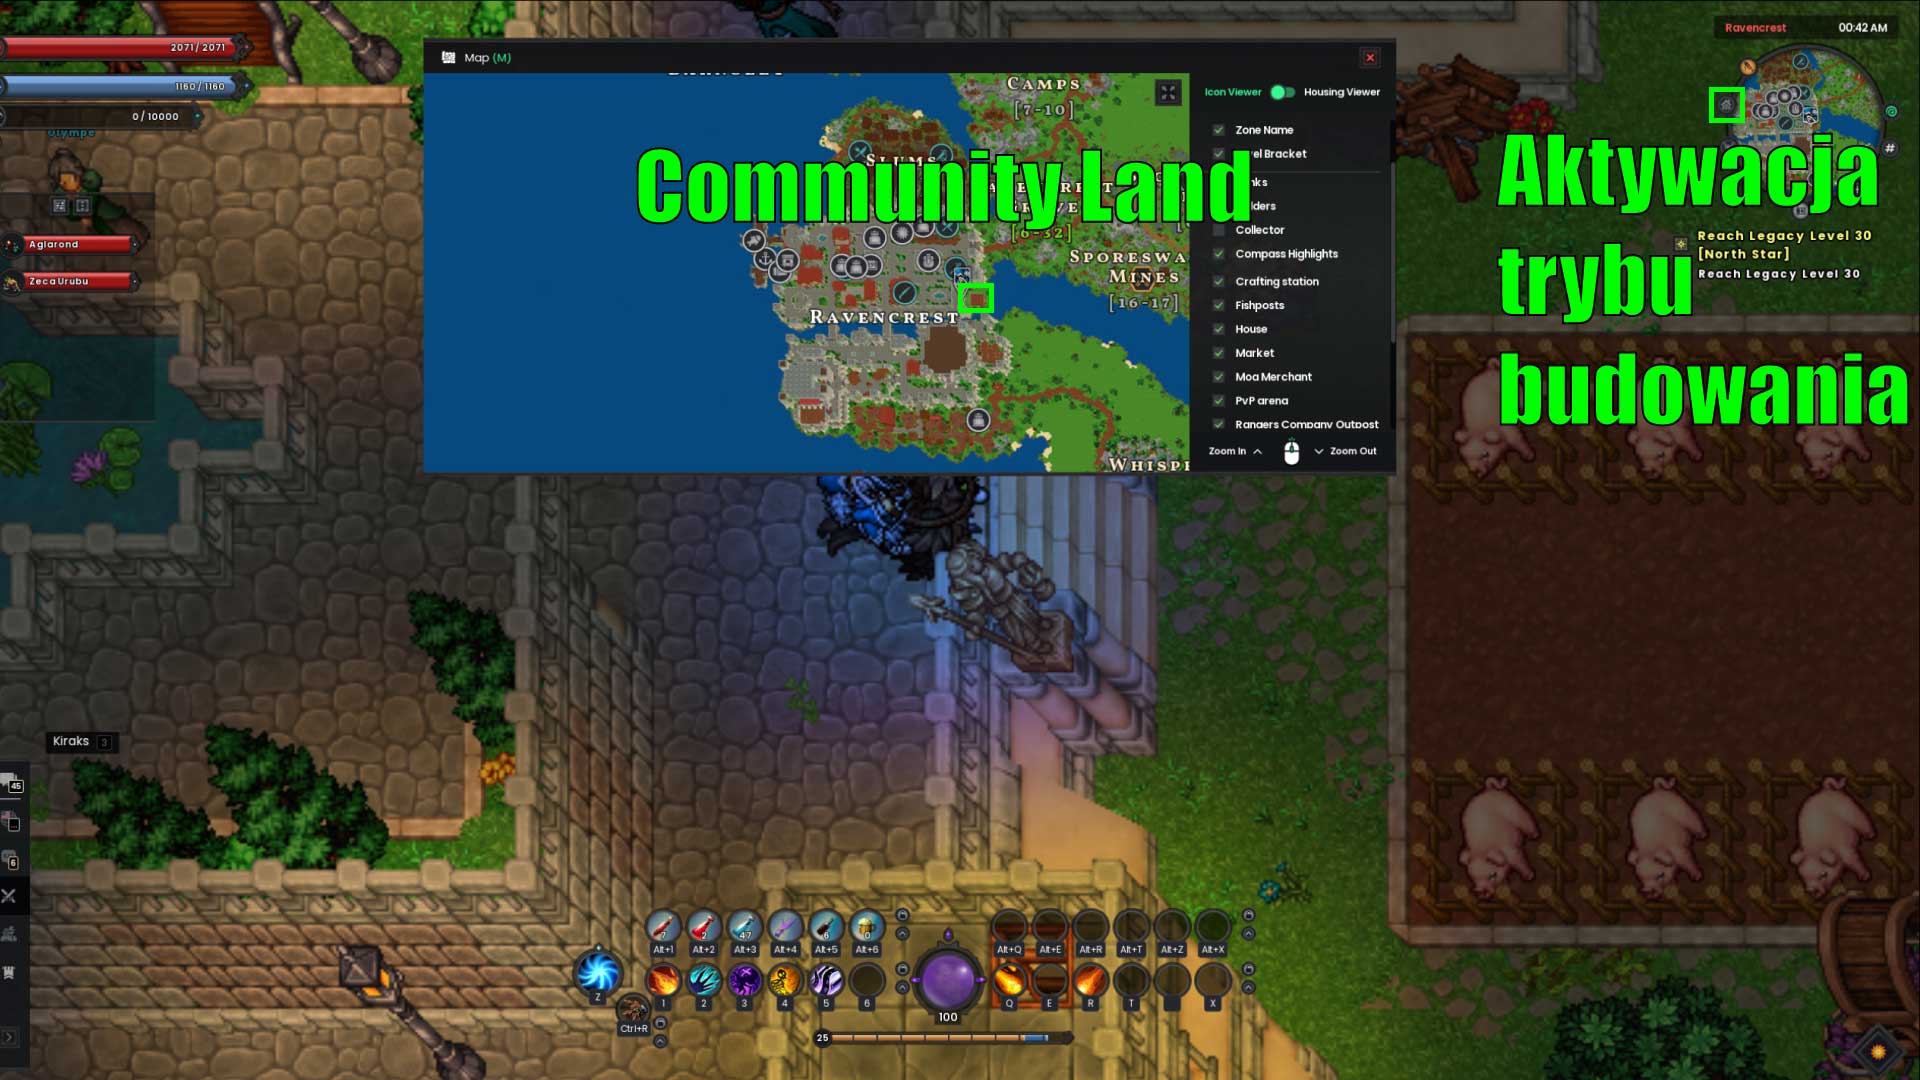 Ravendawn online community land